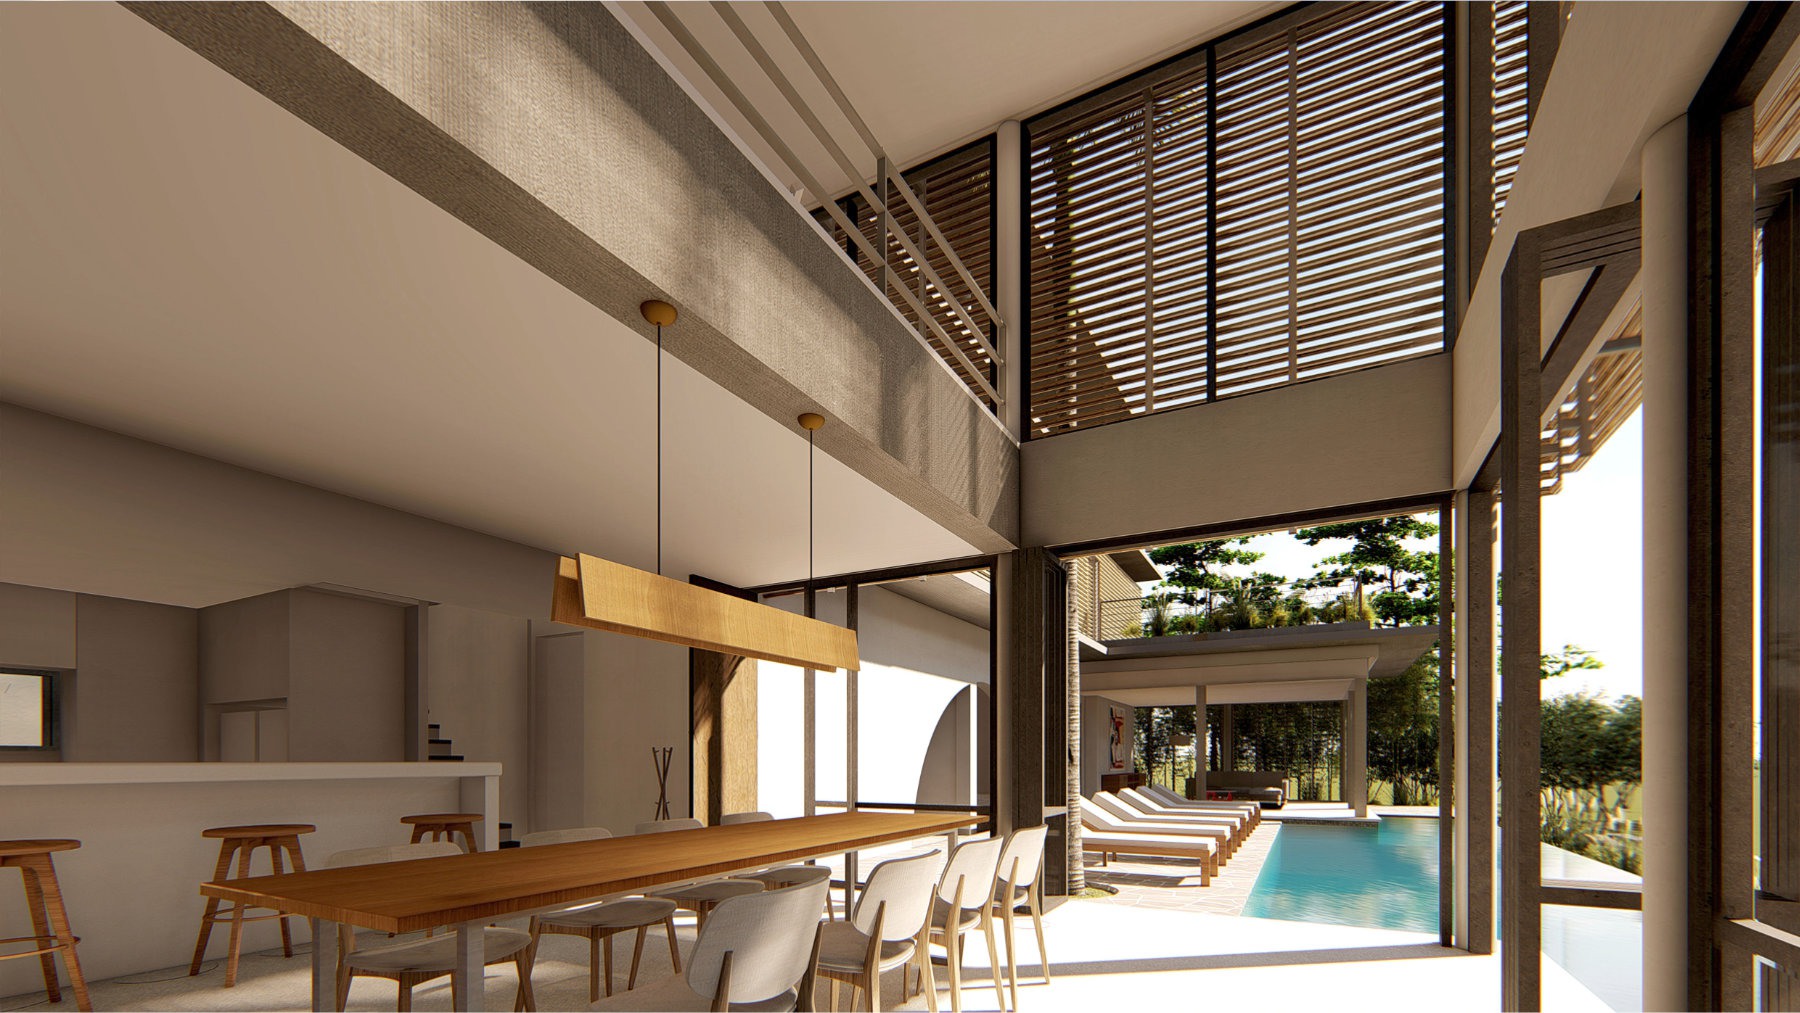 Design Assembly - Bisma Villa - Bali Architect - Interior Design - Bali Villa - Dining Room